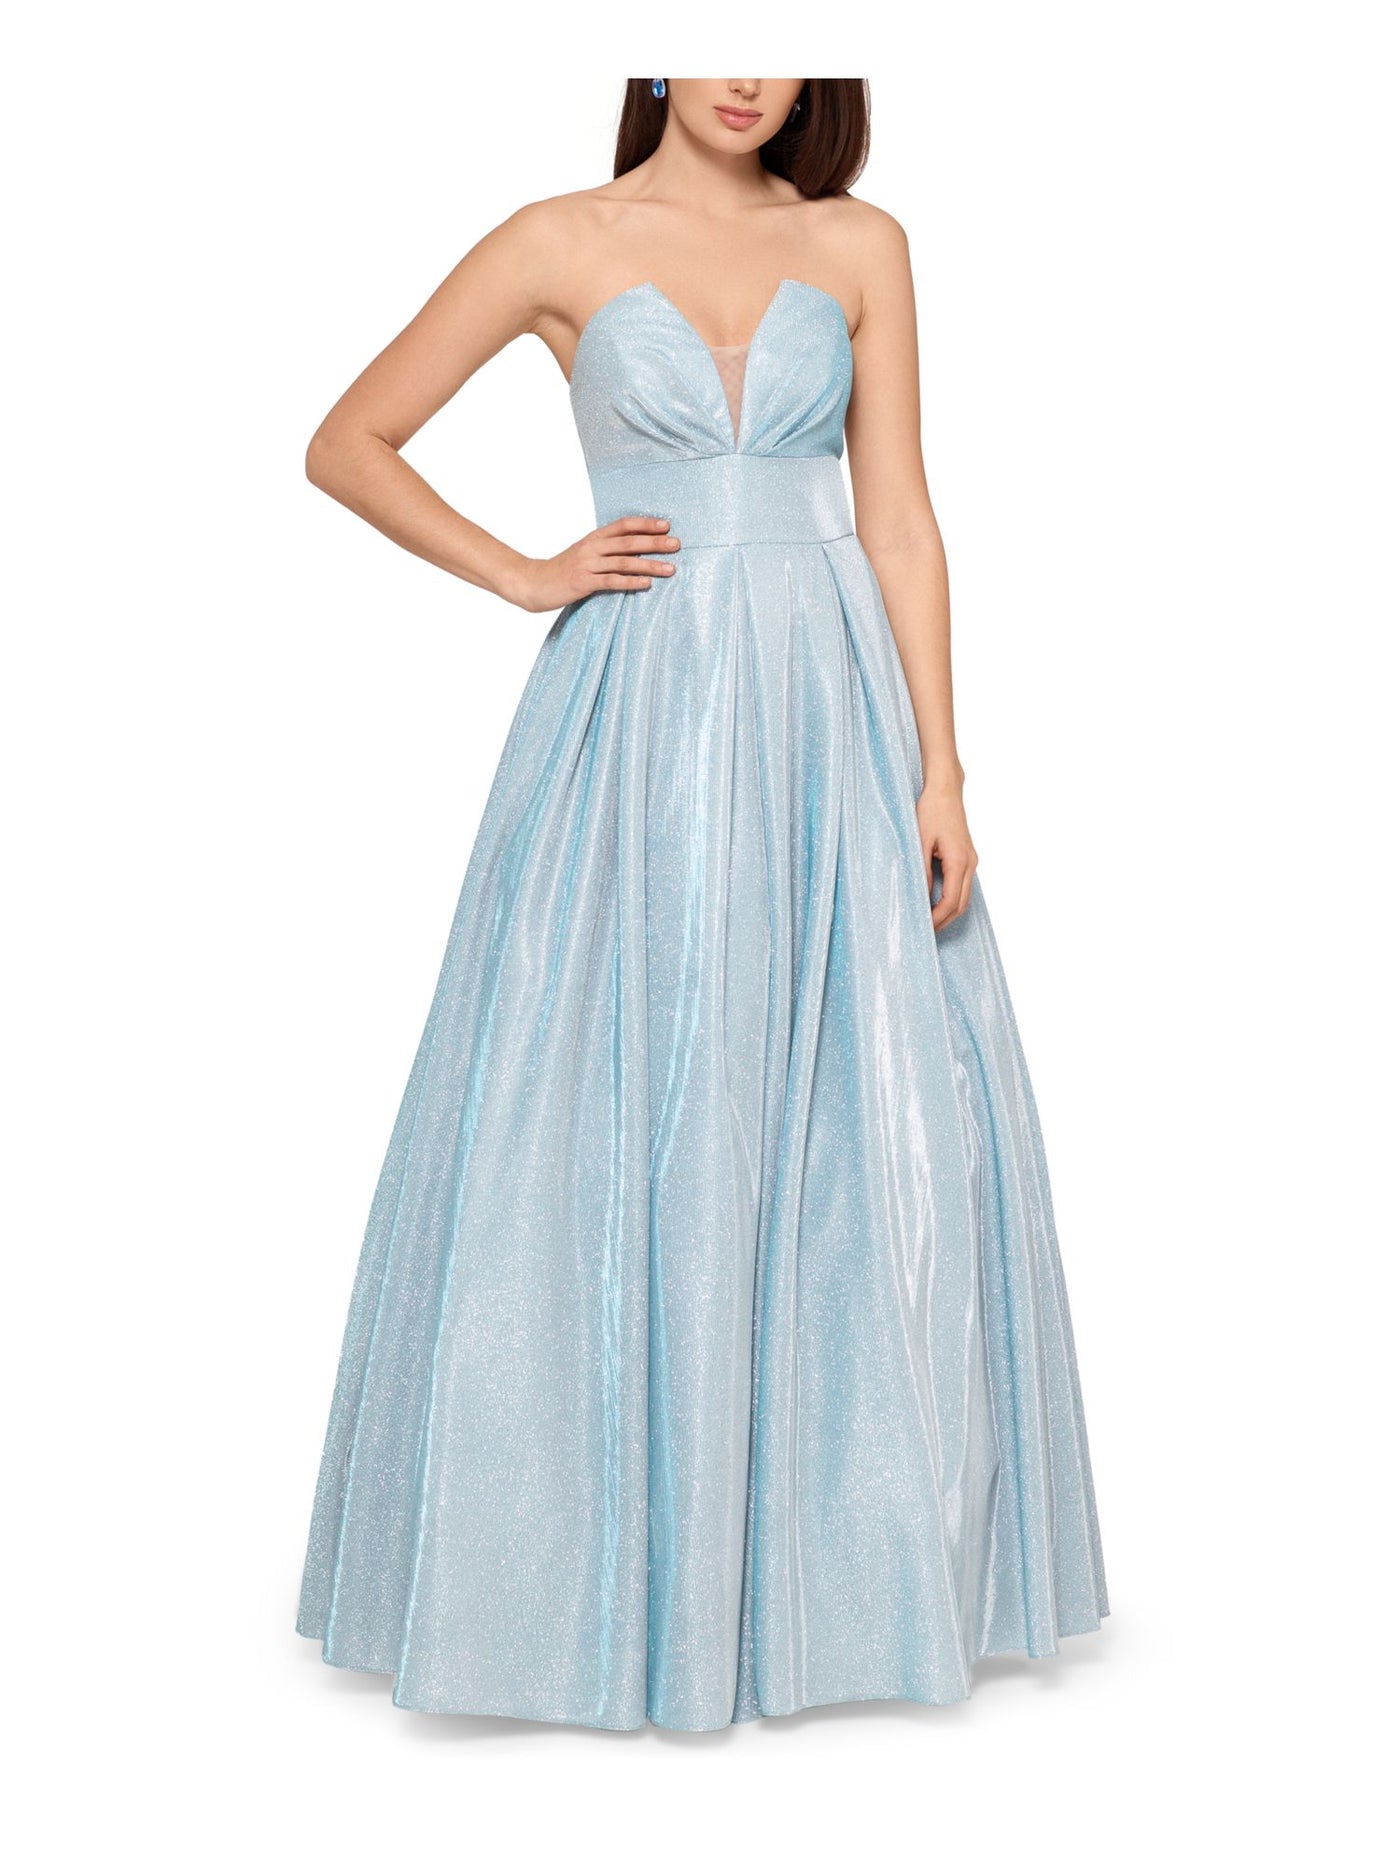 BETSY & ADAM Womens Light Blue Glitter Zippered Metallic Illusion Ball Gown Sleeveless Sweetheart Neckline Full-Length Formal Dress 4